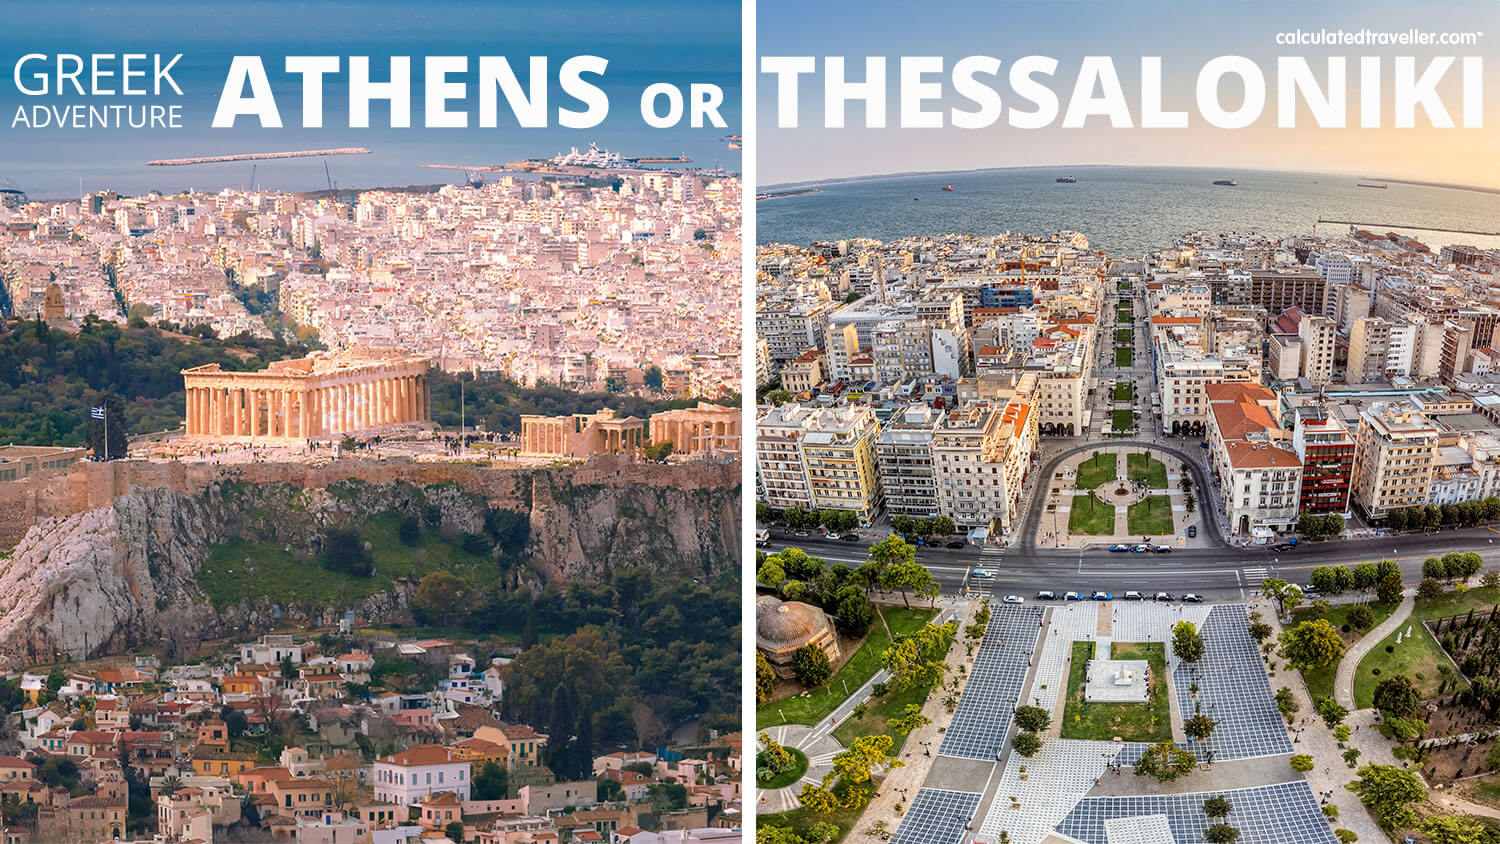 Greek Adventure: Athens or Thessaloniki Travel